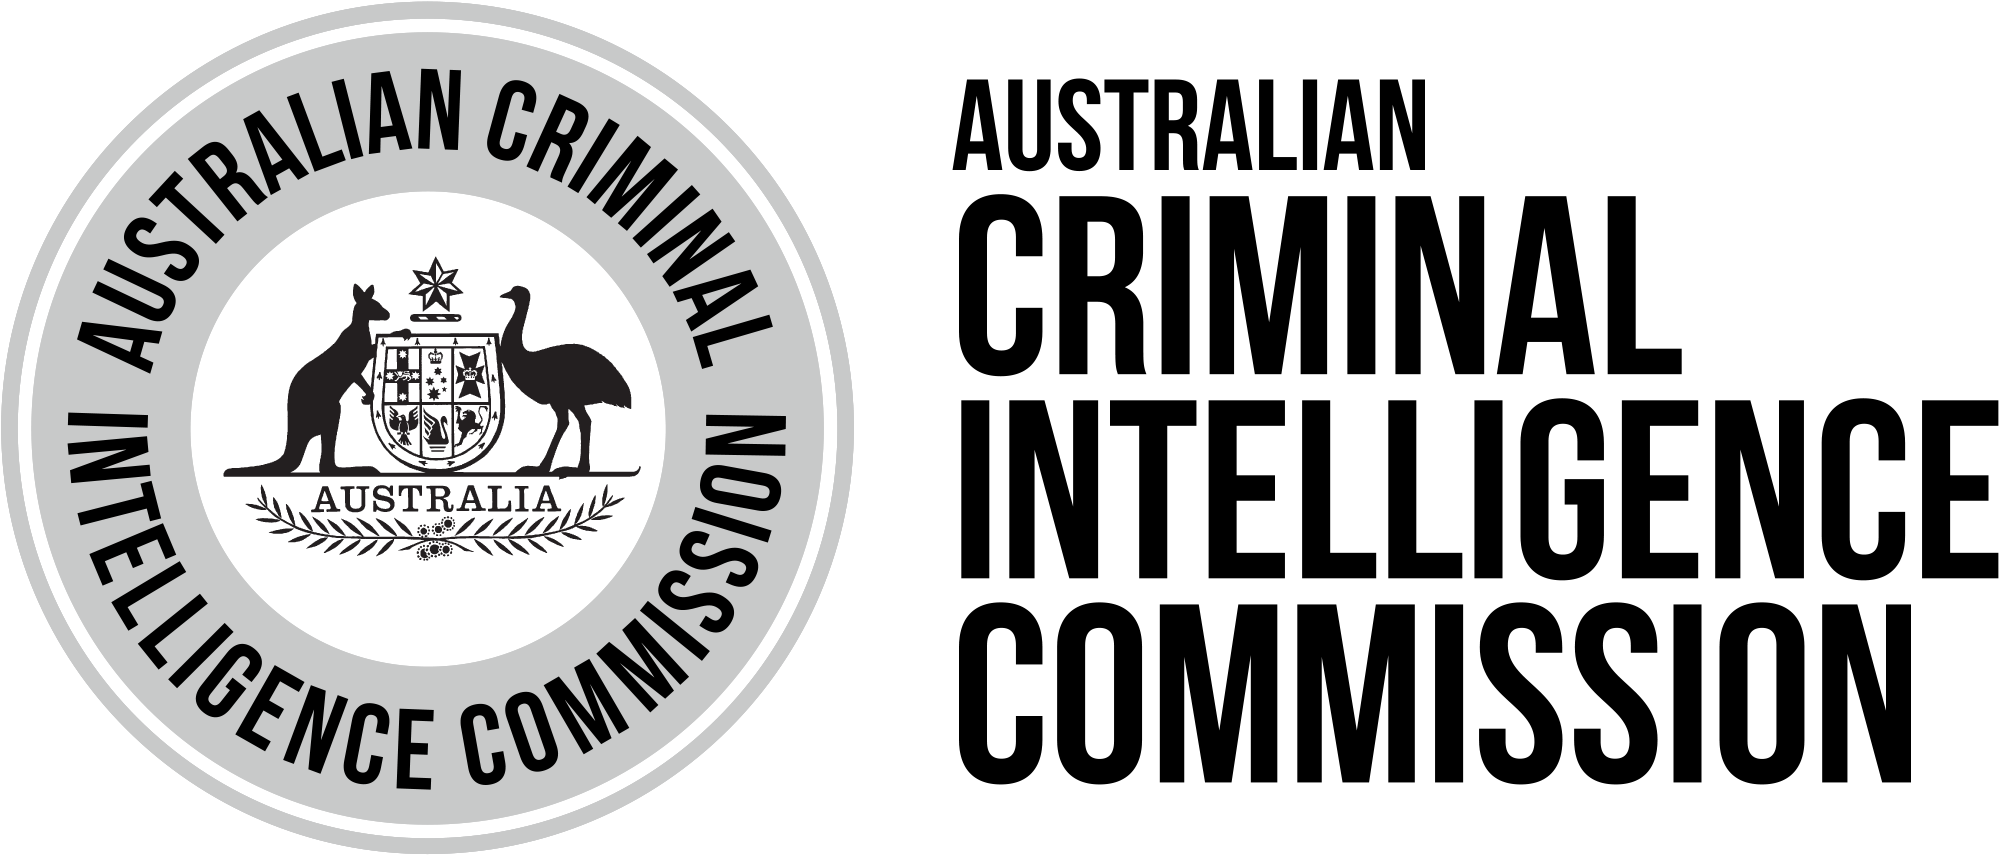 Acic-logo - Australian Criminal Intelligence Commission (2133x937), Png Download